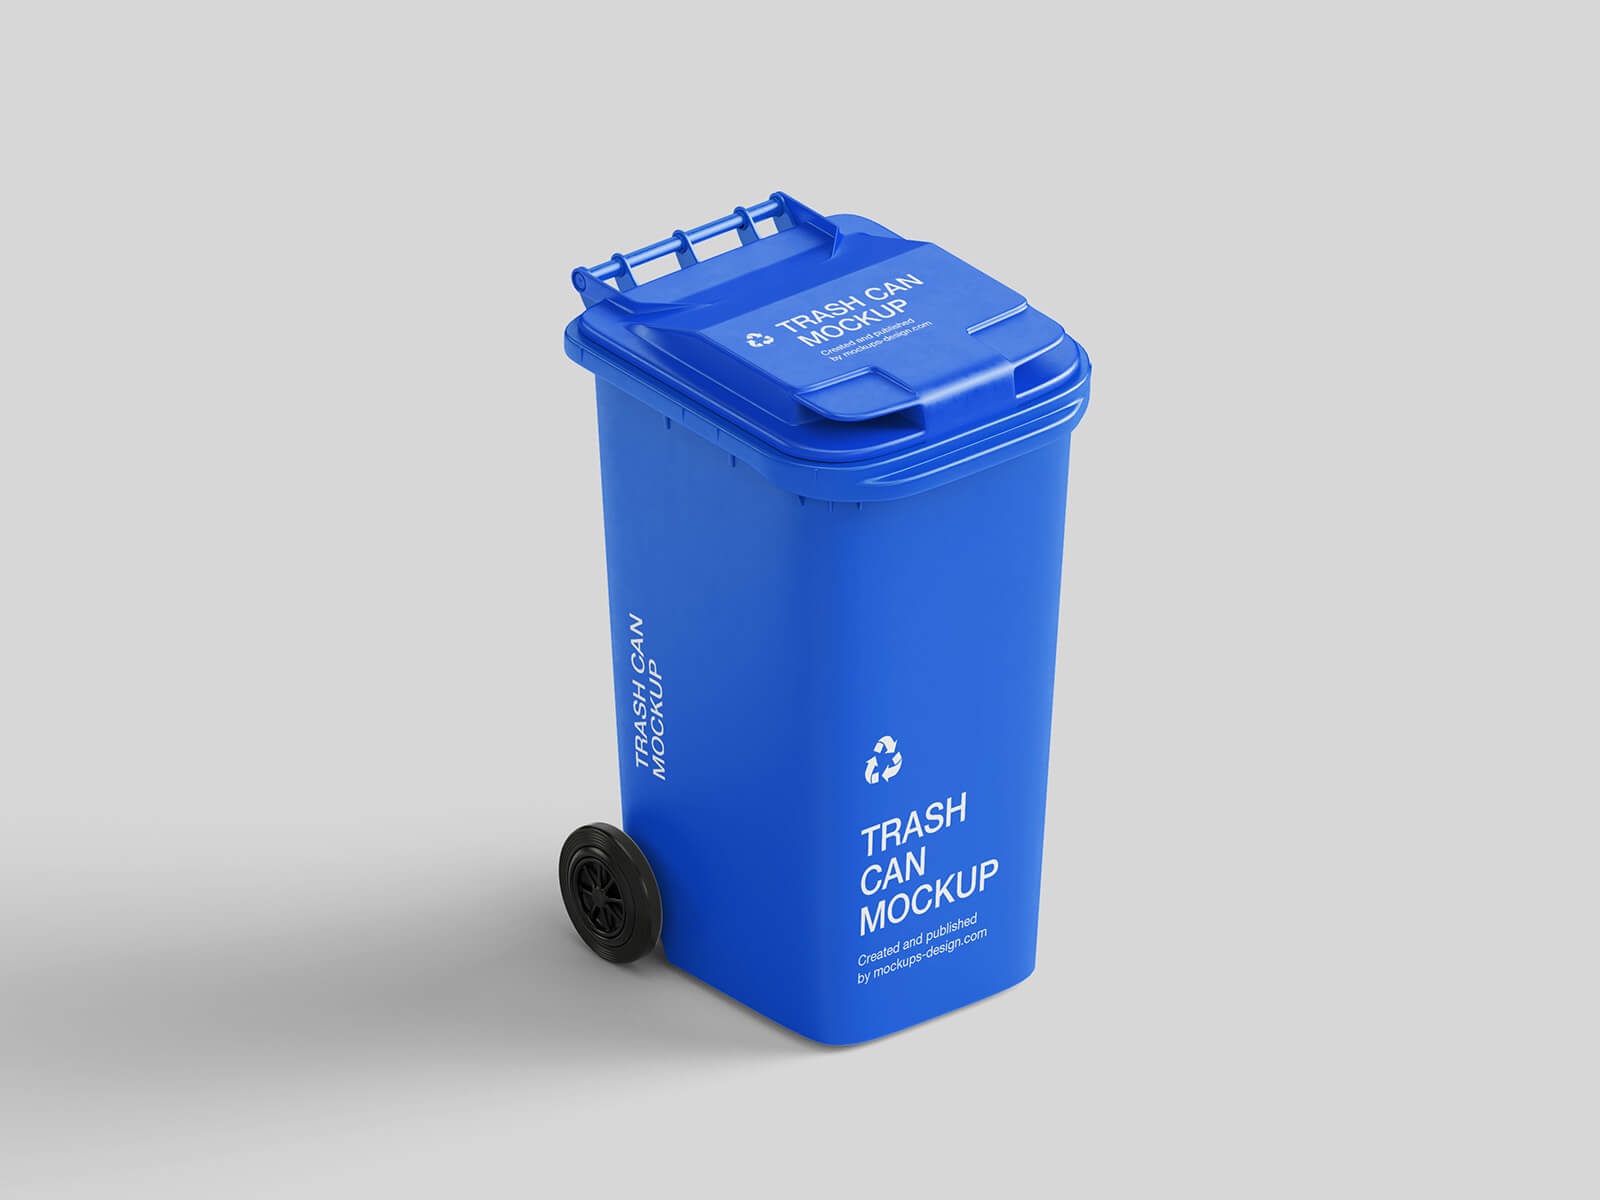 5 Free Garbage Bin / Trash Can Mockup PSD Files